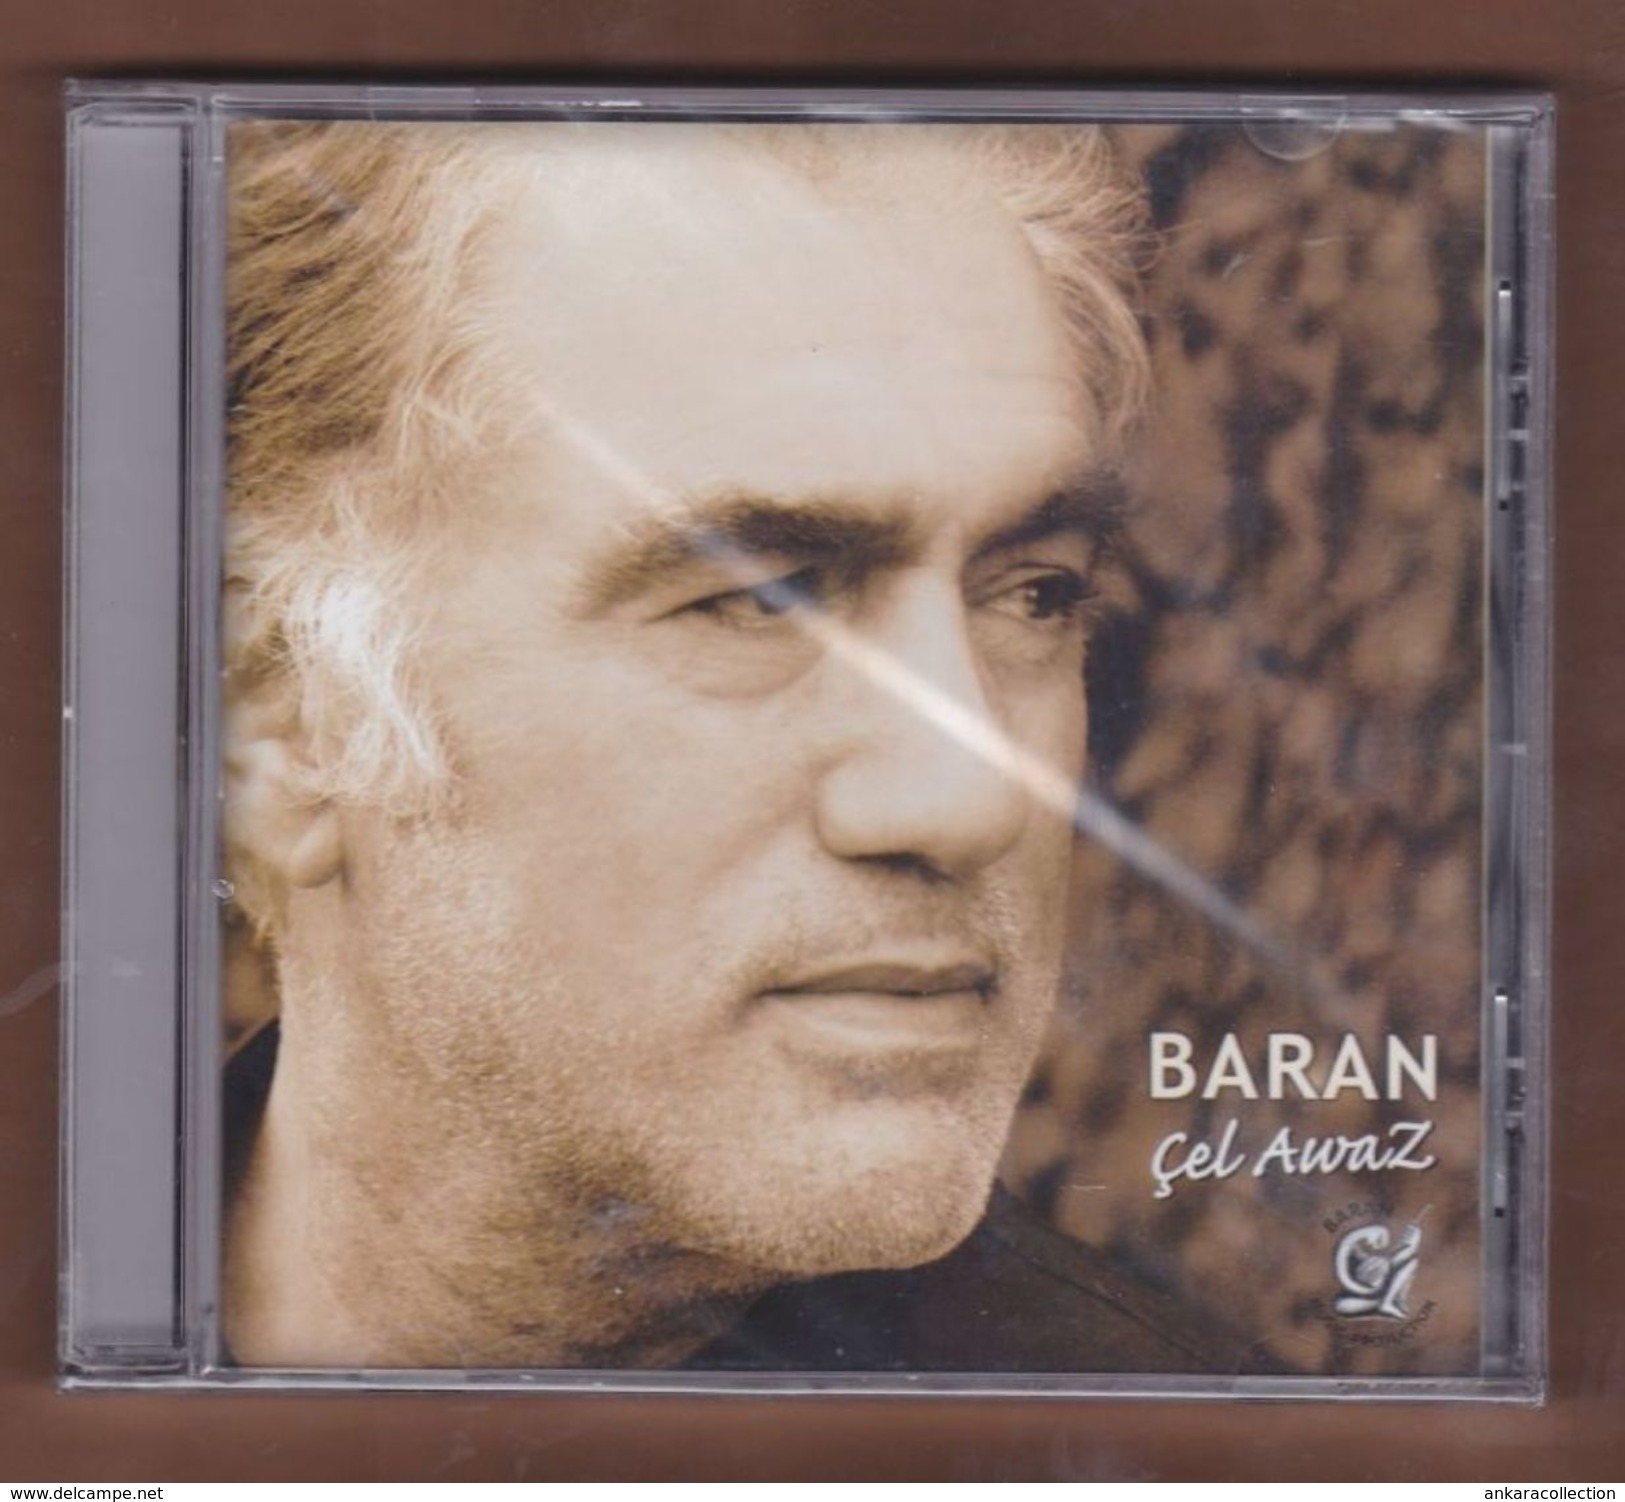 AC - Baran çel Awaz BRAND NEW TURKISH MUSIC CD - World Music